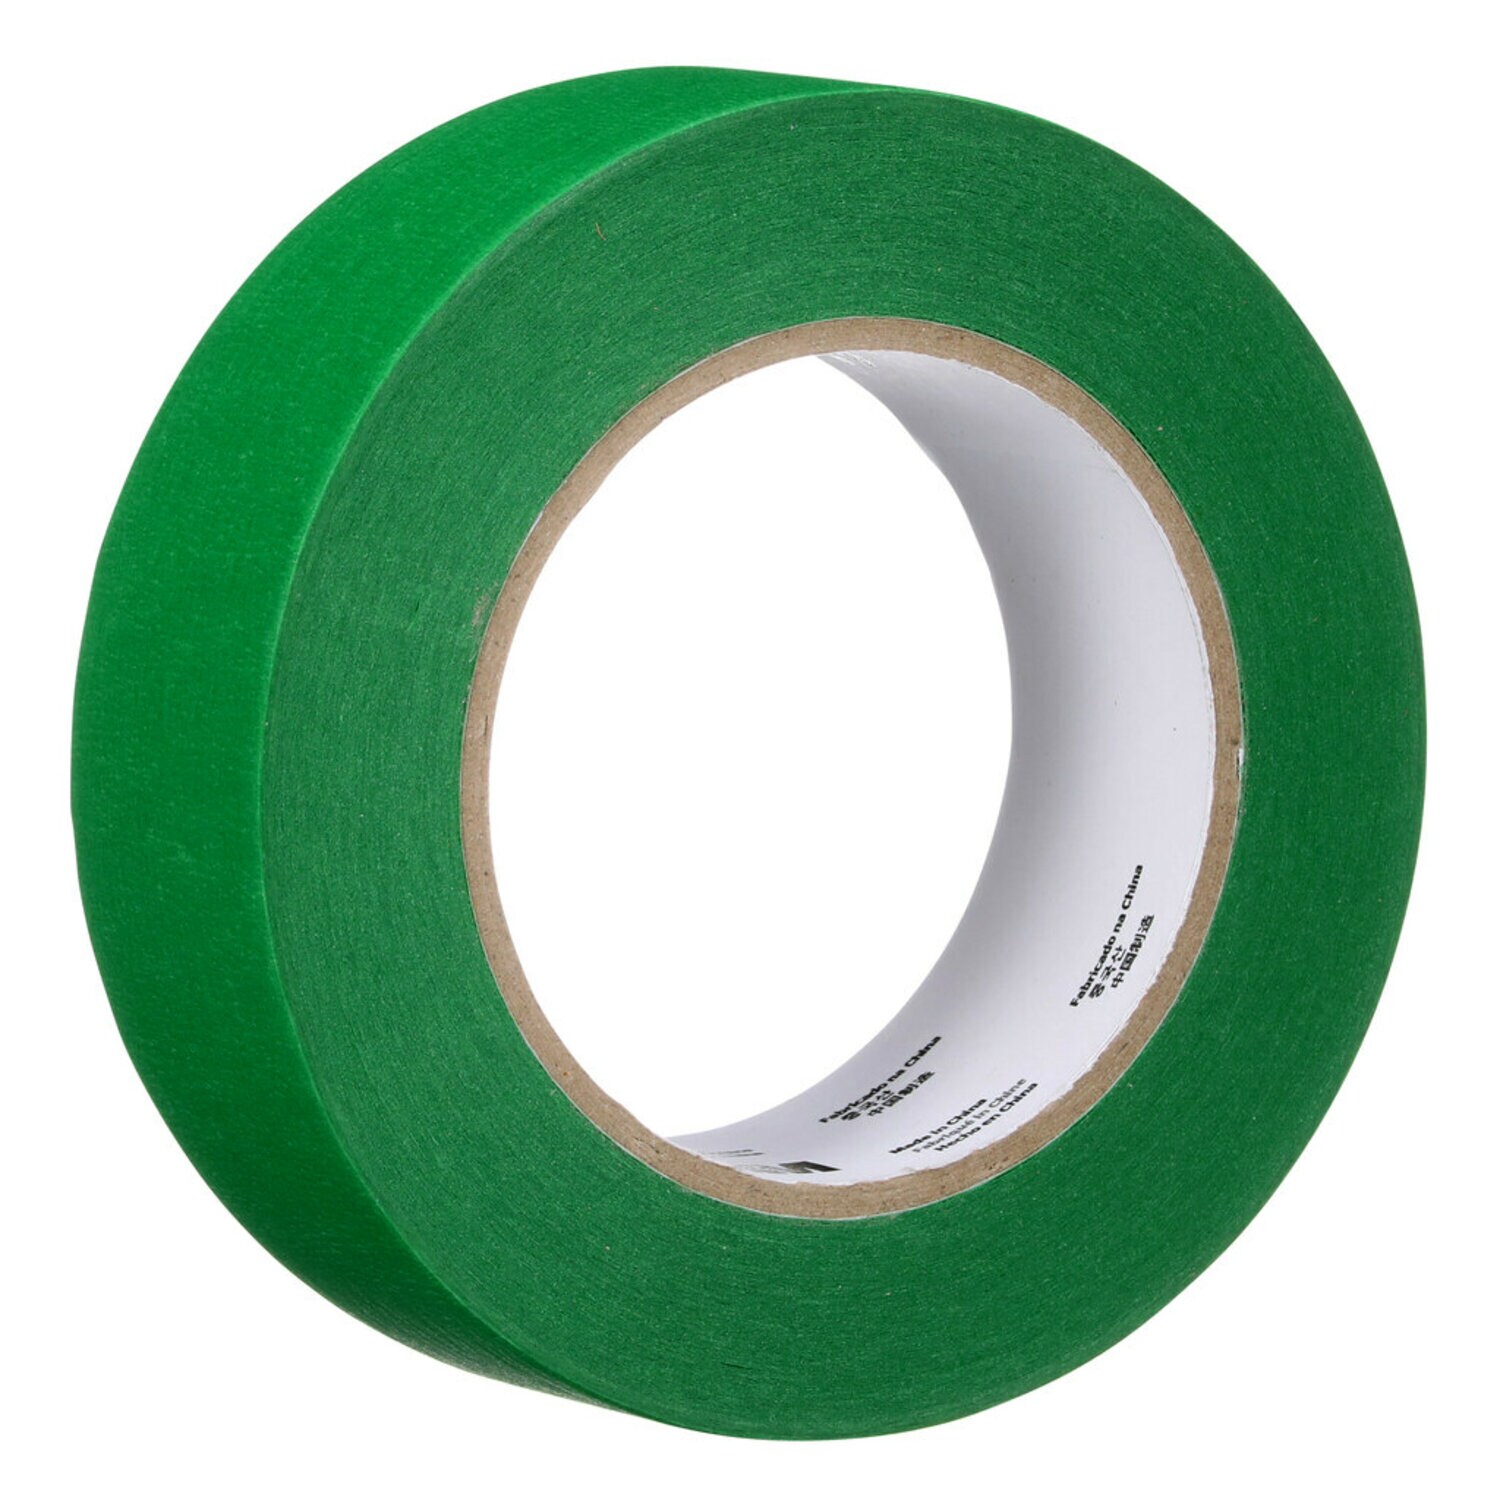 7100299470 - 3M UV Resistant Green Masking Tape, 36 mm x 55 m, 36 Rolls/Case